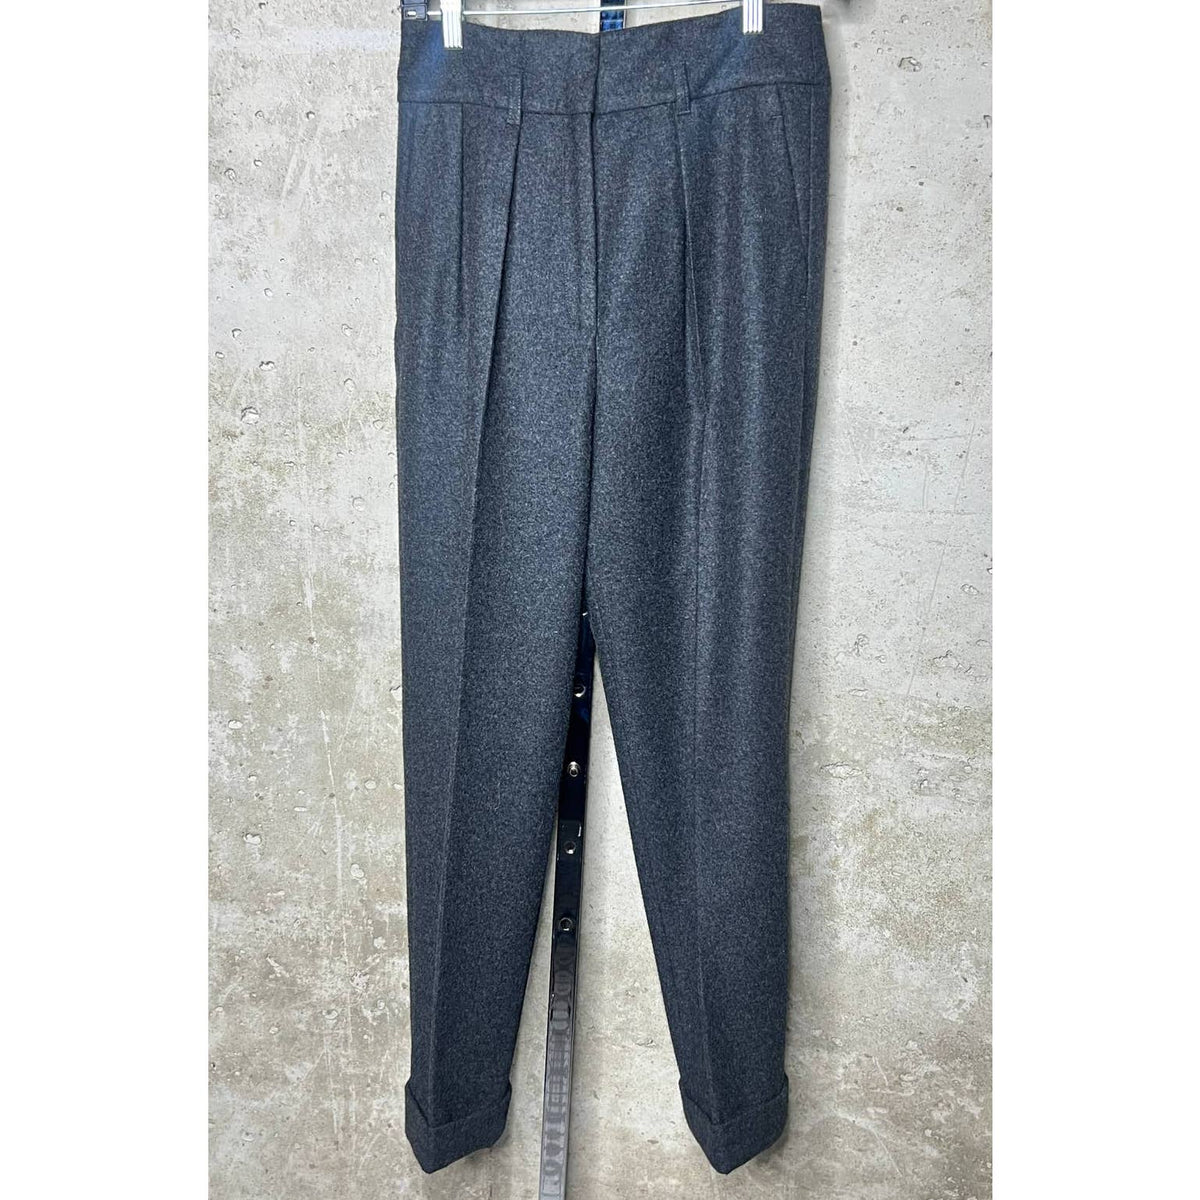 Michael Kors Collection Grey Pants Sz.6